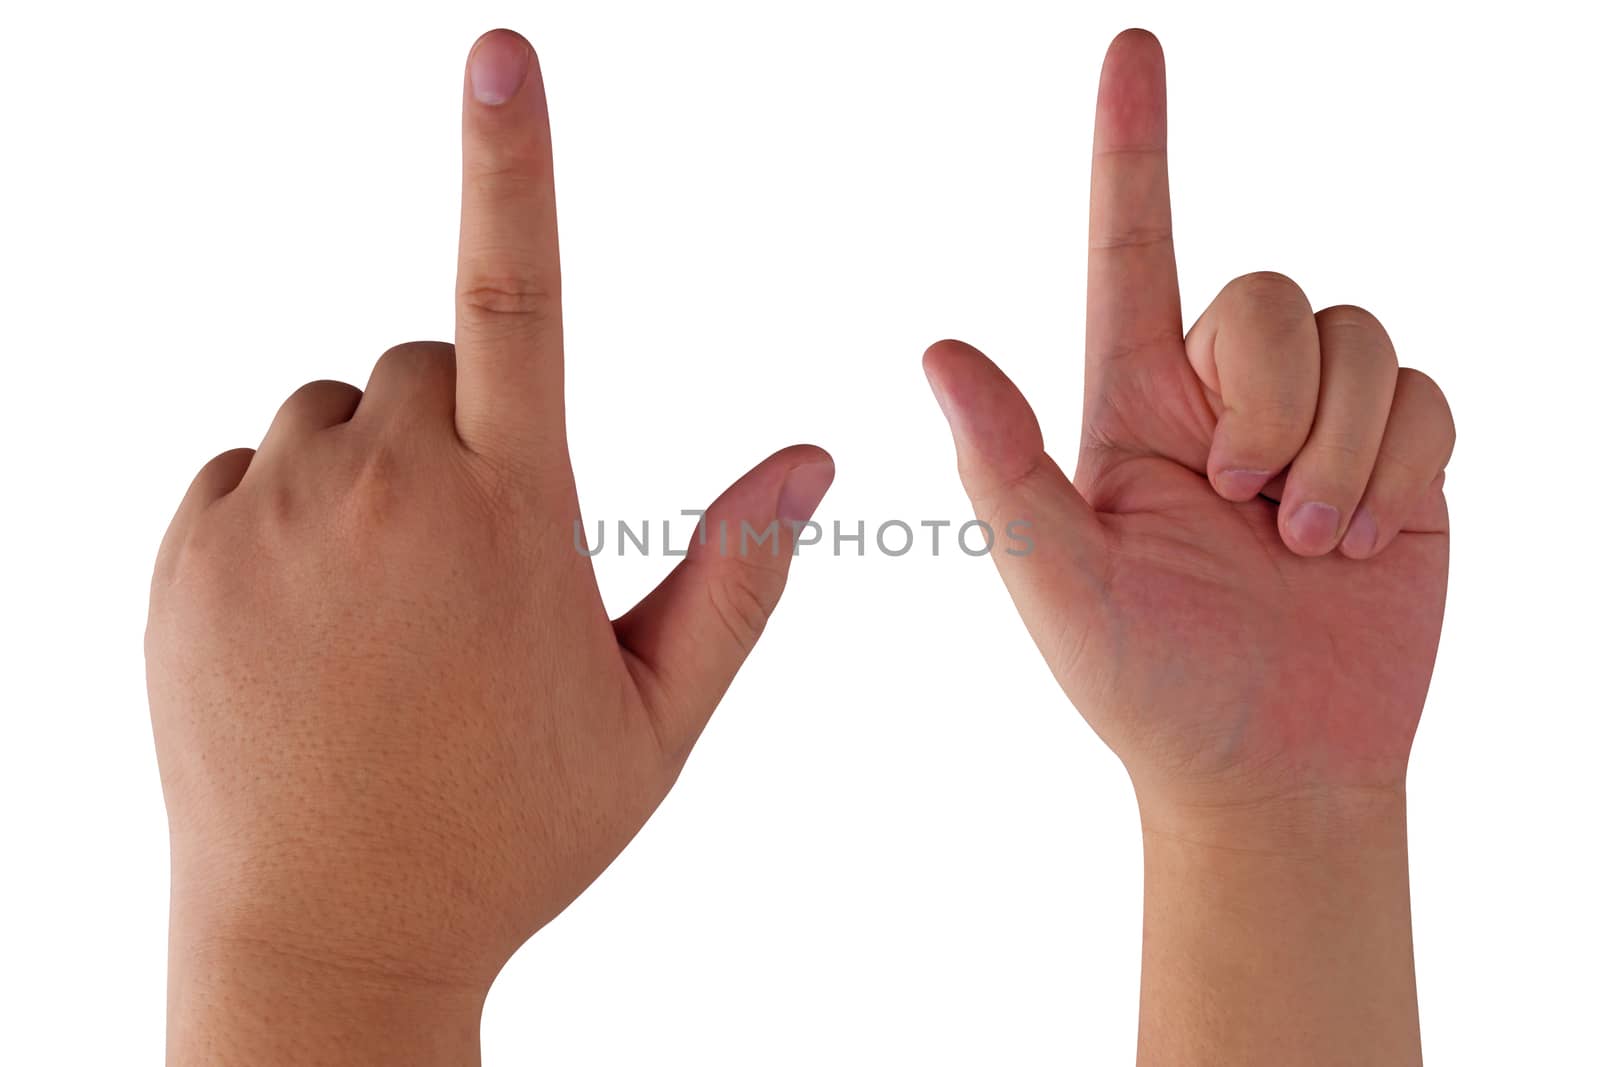 Isolate man hand on white background, point finger